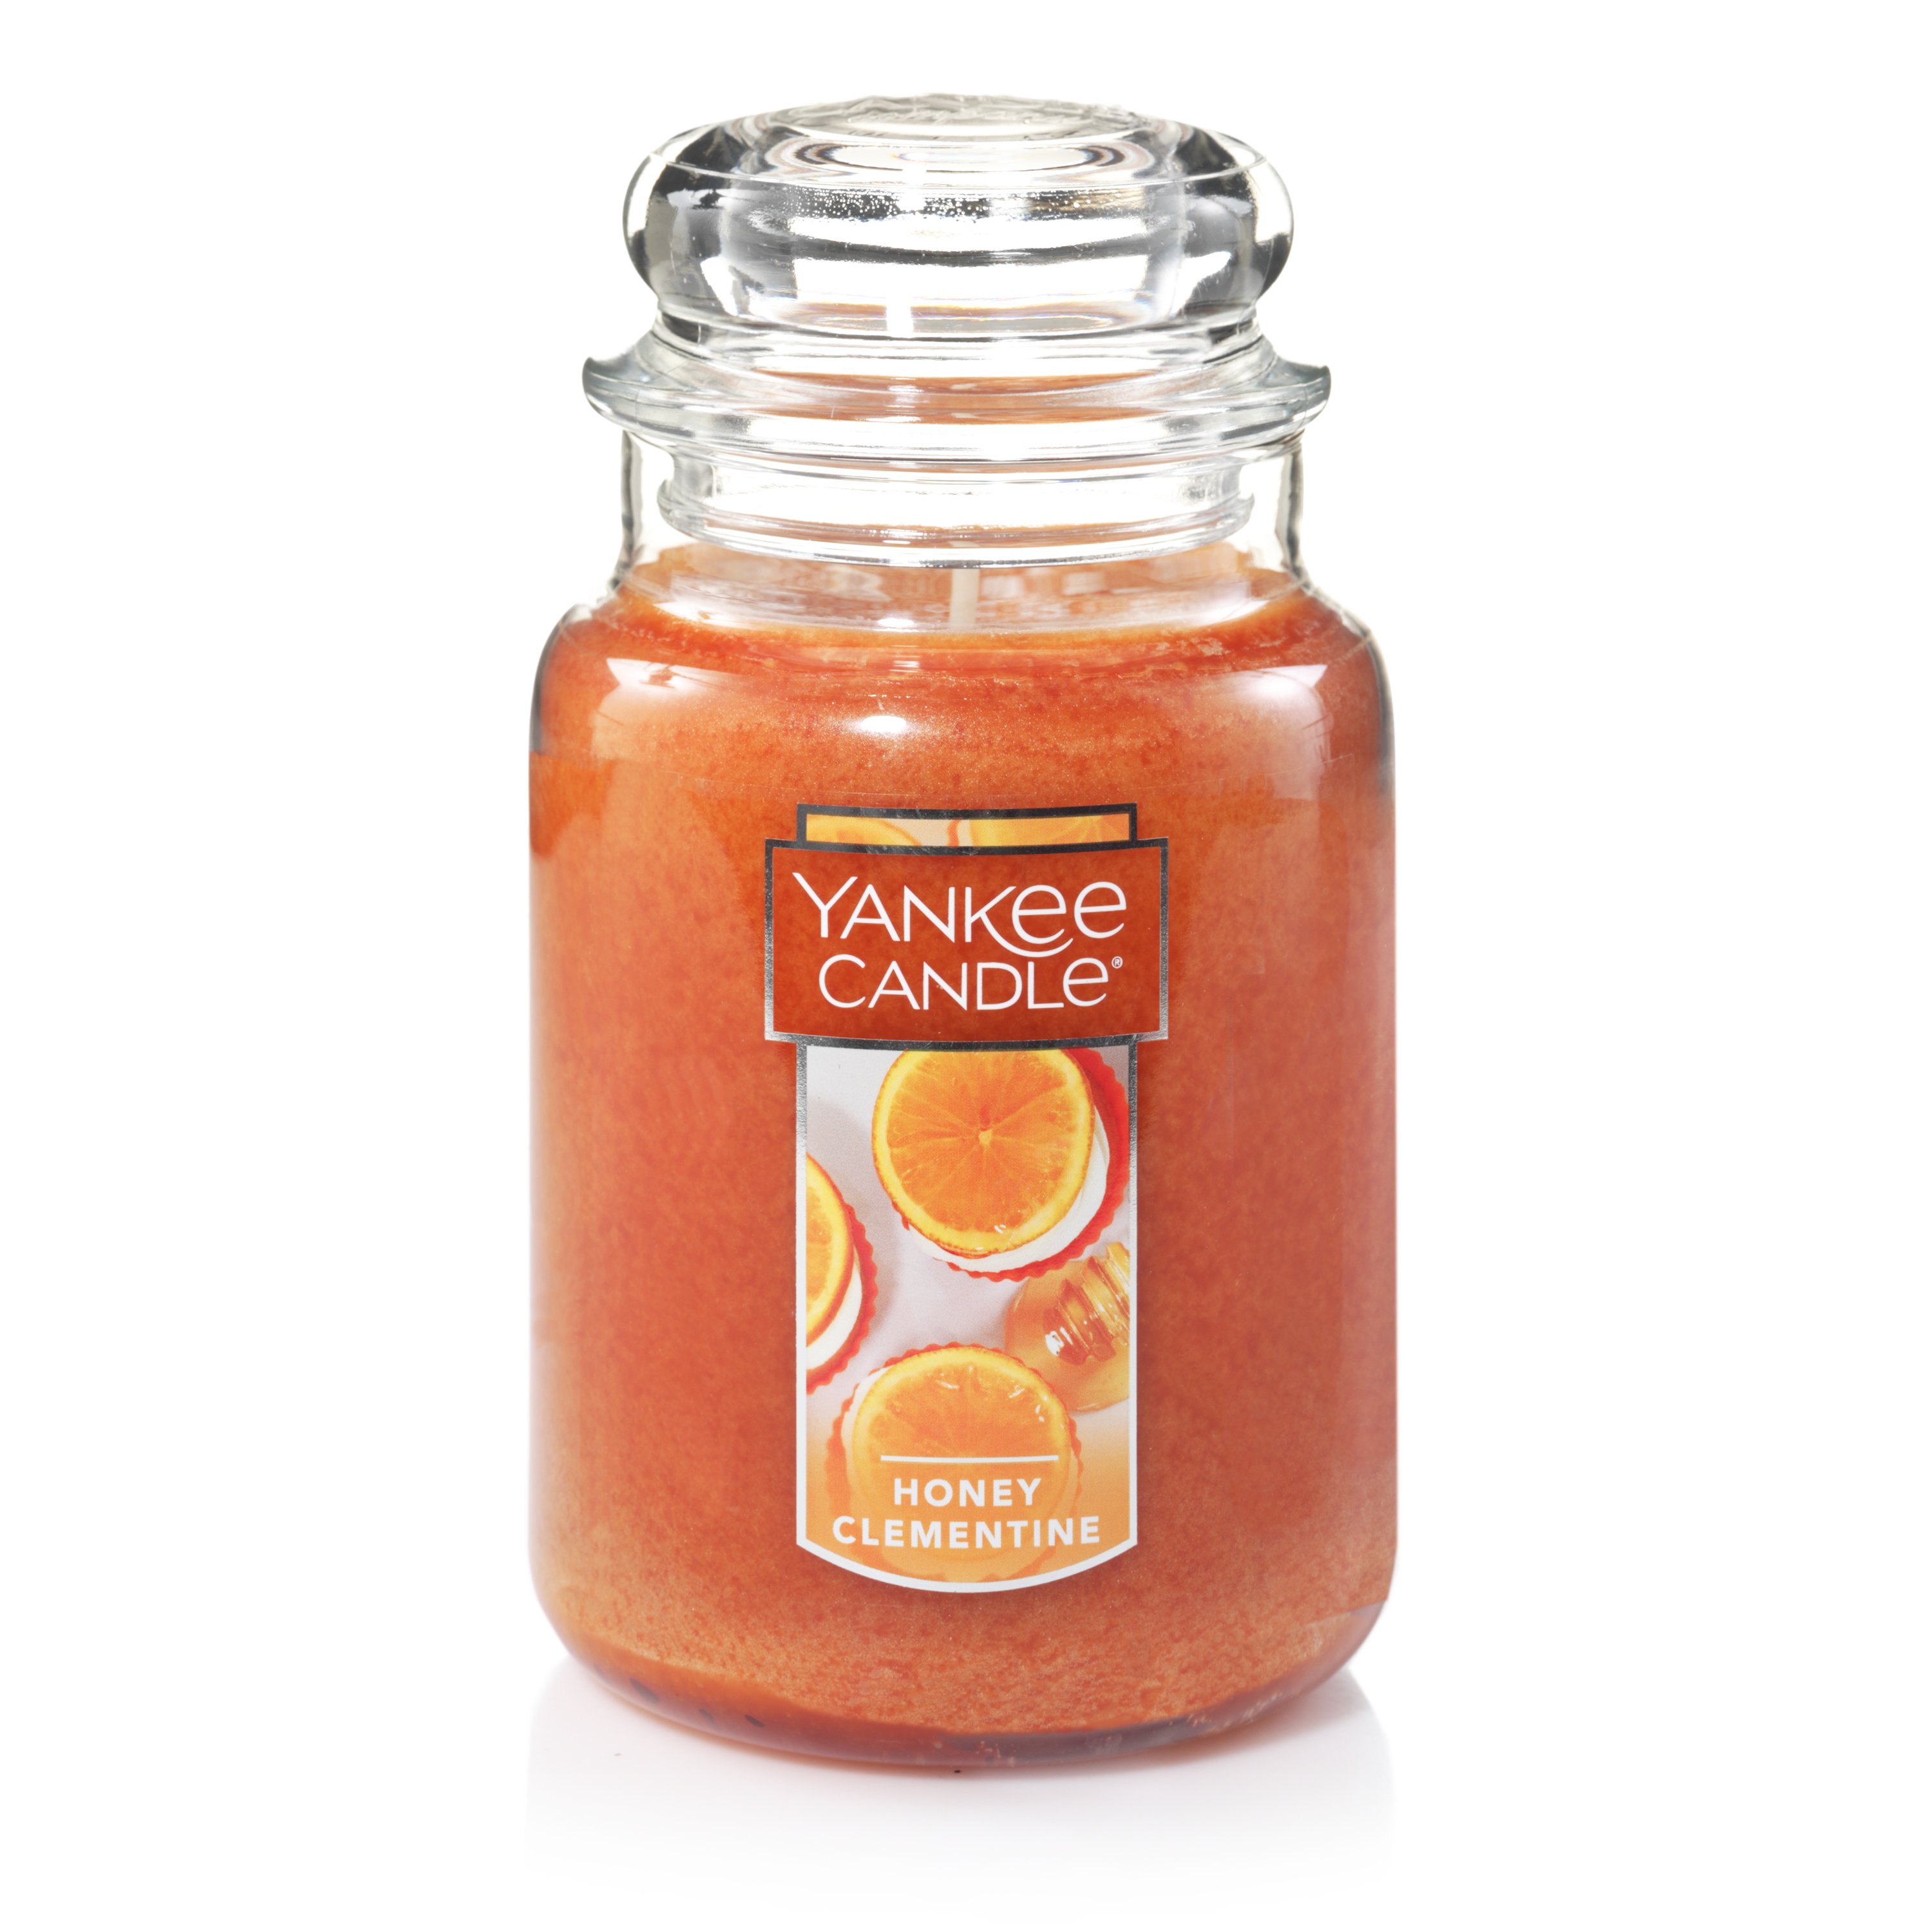 Honey Clementine 22 oz. Original Large Jar Candles - Large Jar Candles